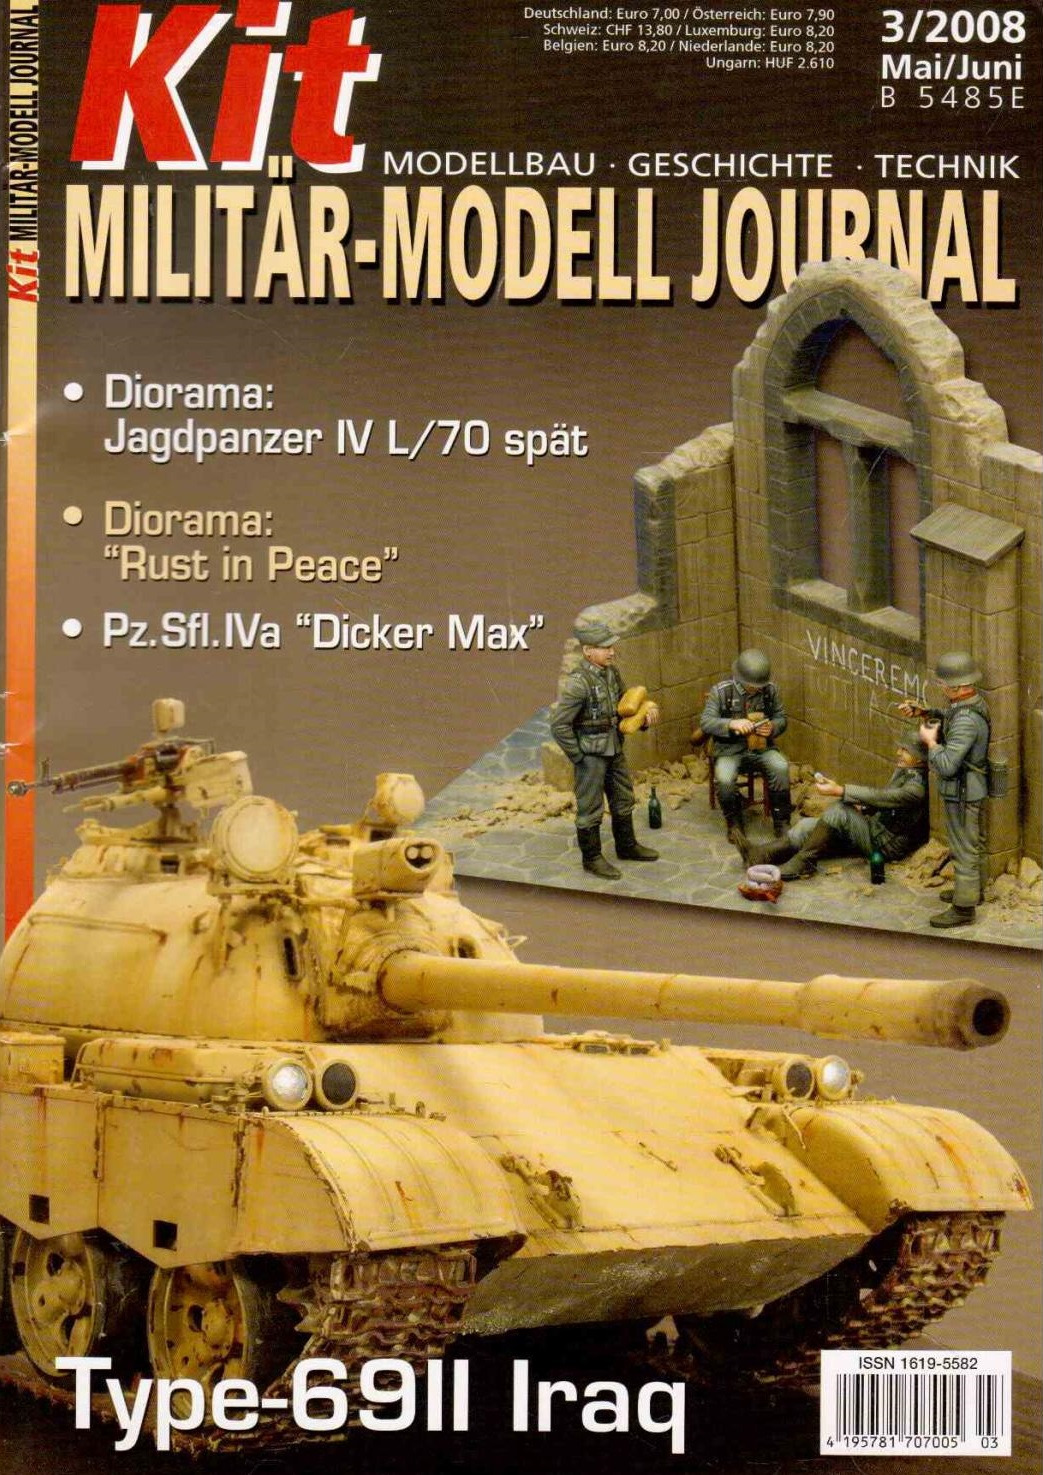 Kit Militär-Modell Journal